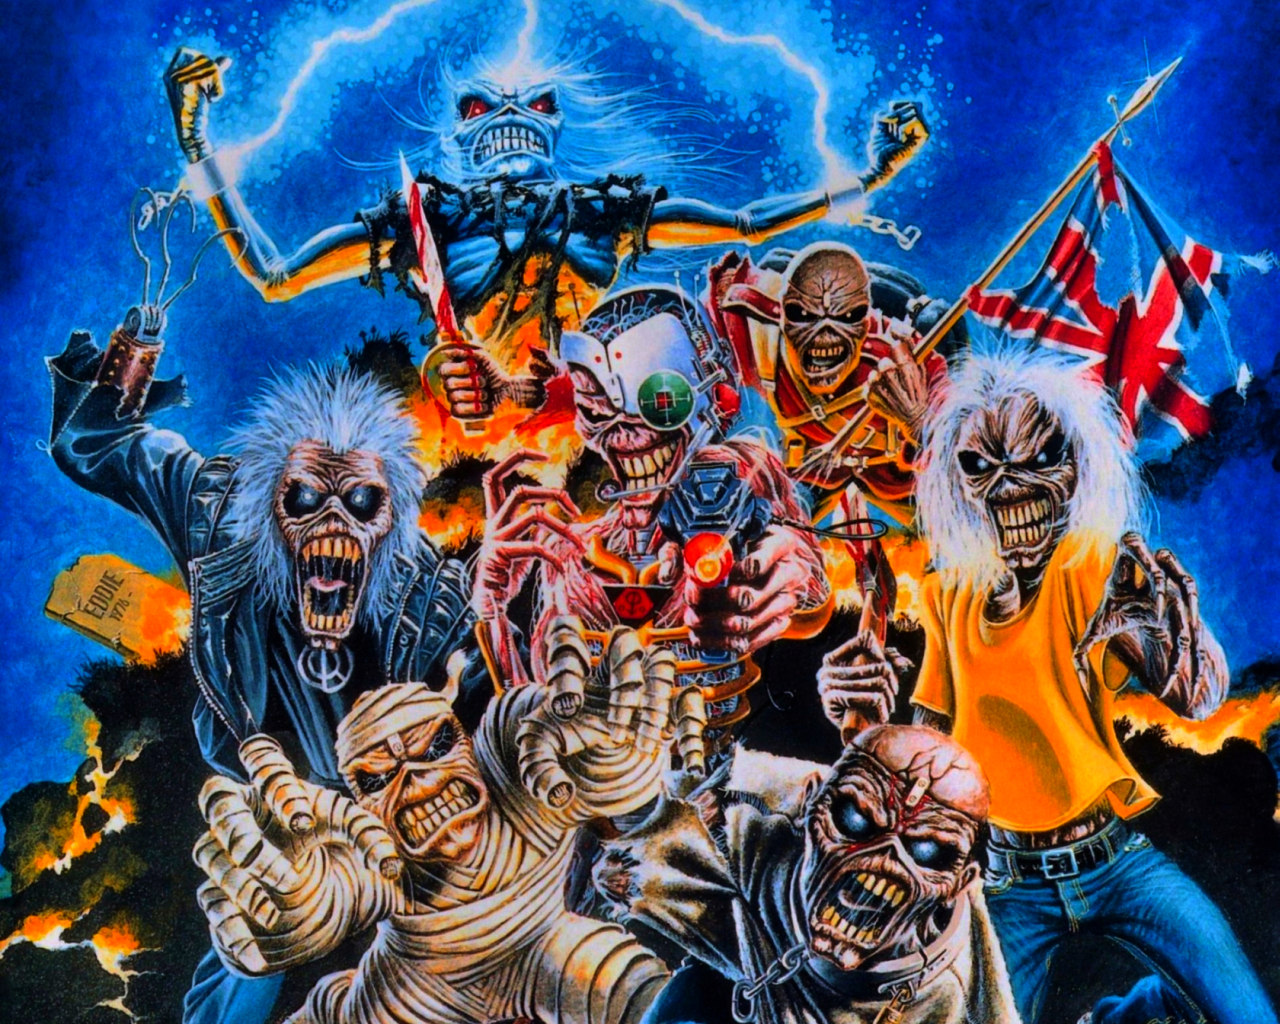 Iron Maiden Album Cover Art - Derek Riggs Artworks 1280x1024